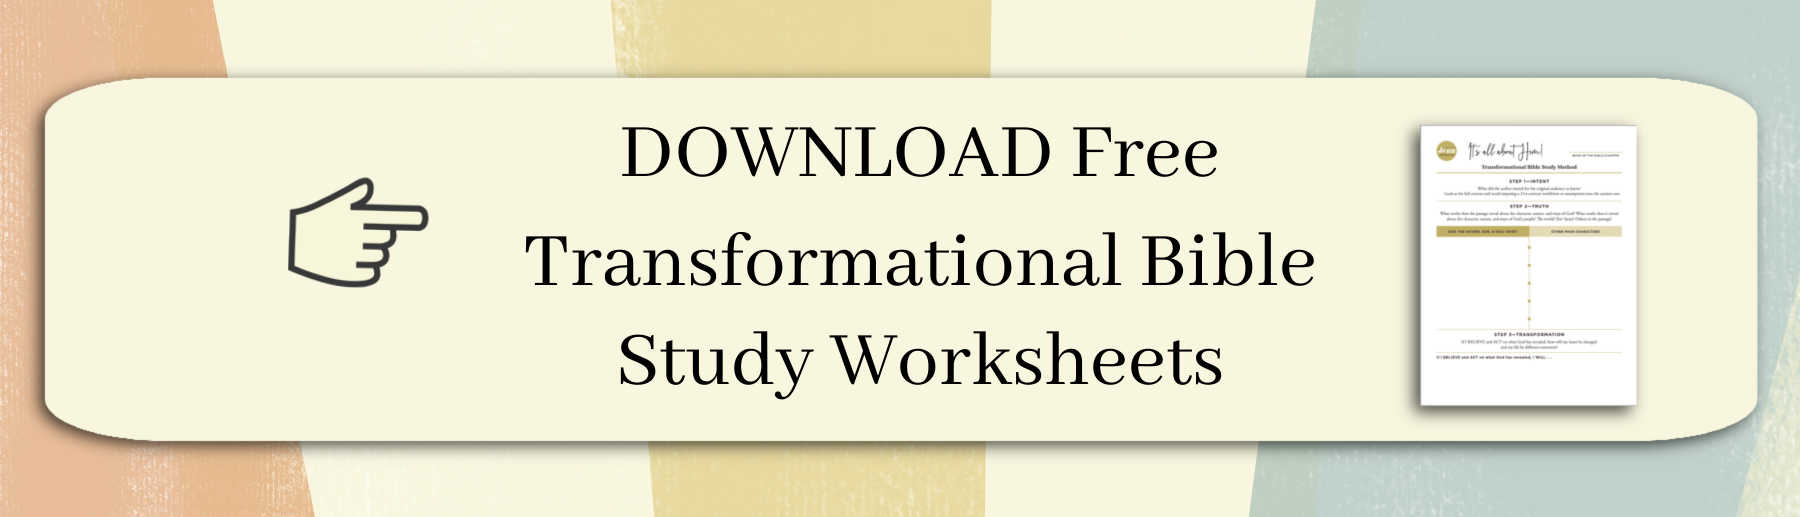 Download Embracing Joy Transformational Bible Study Worksheets